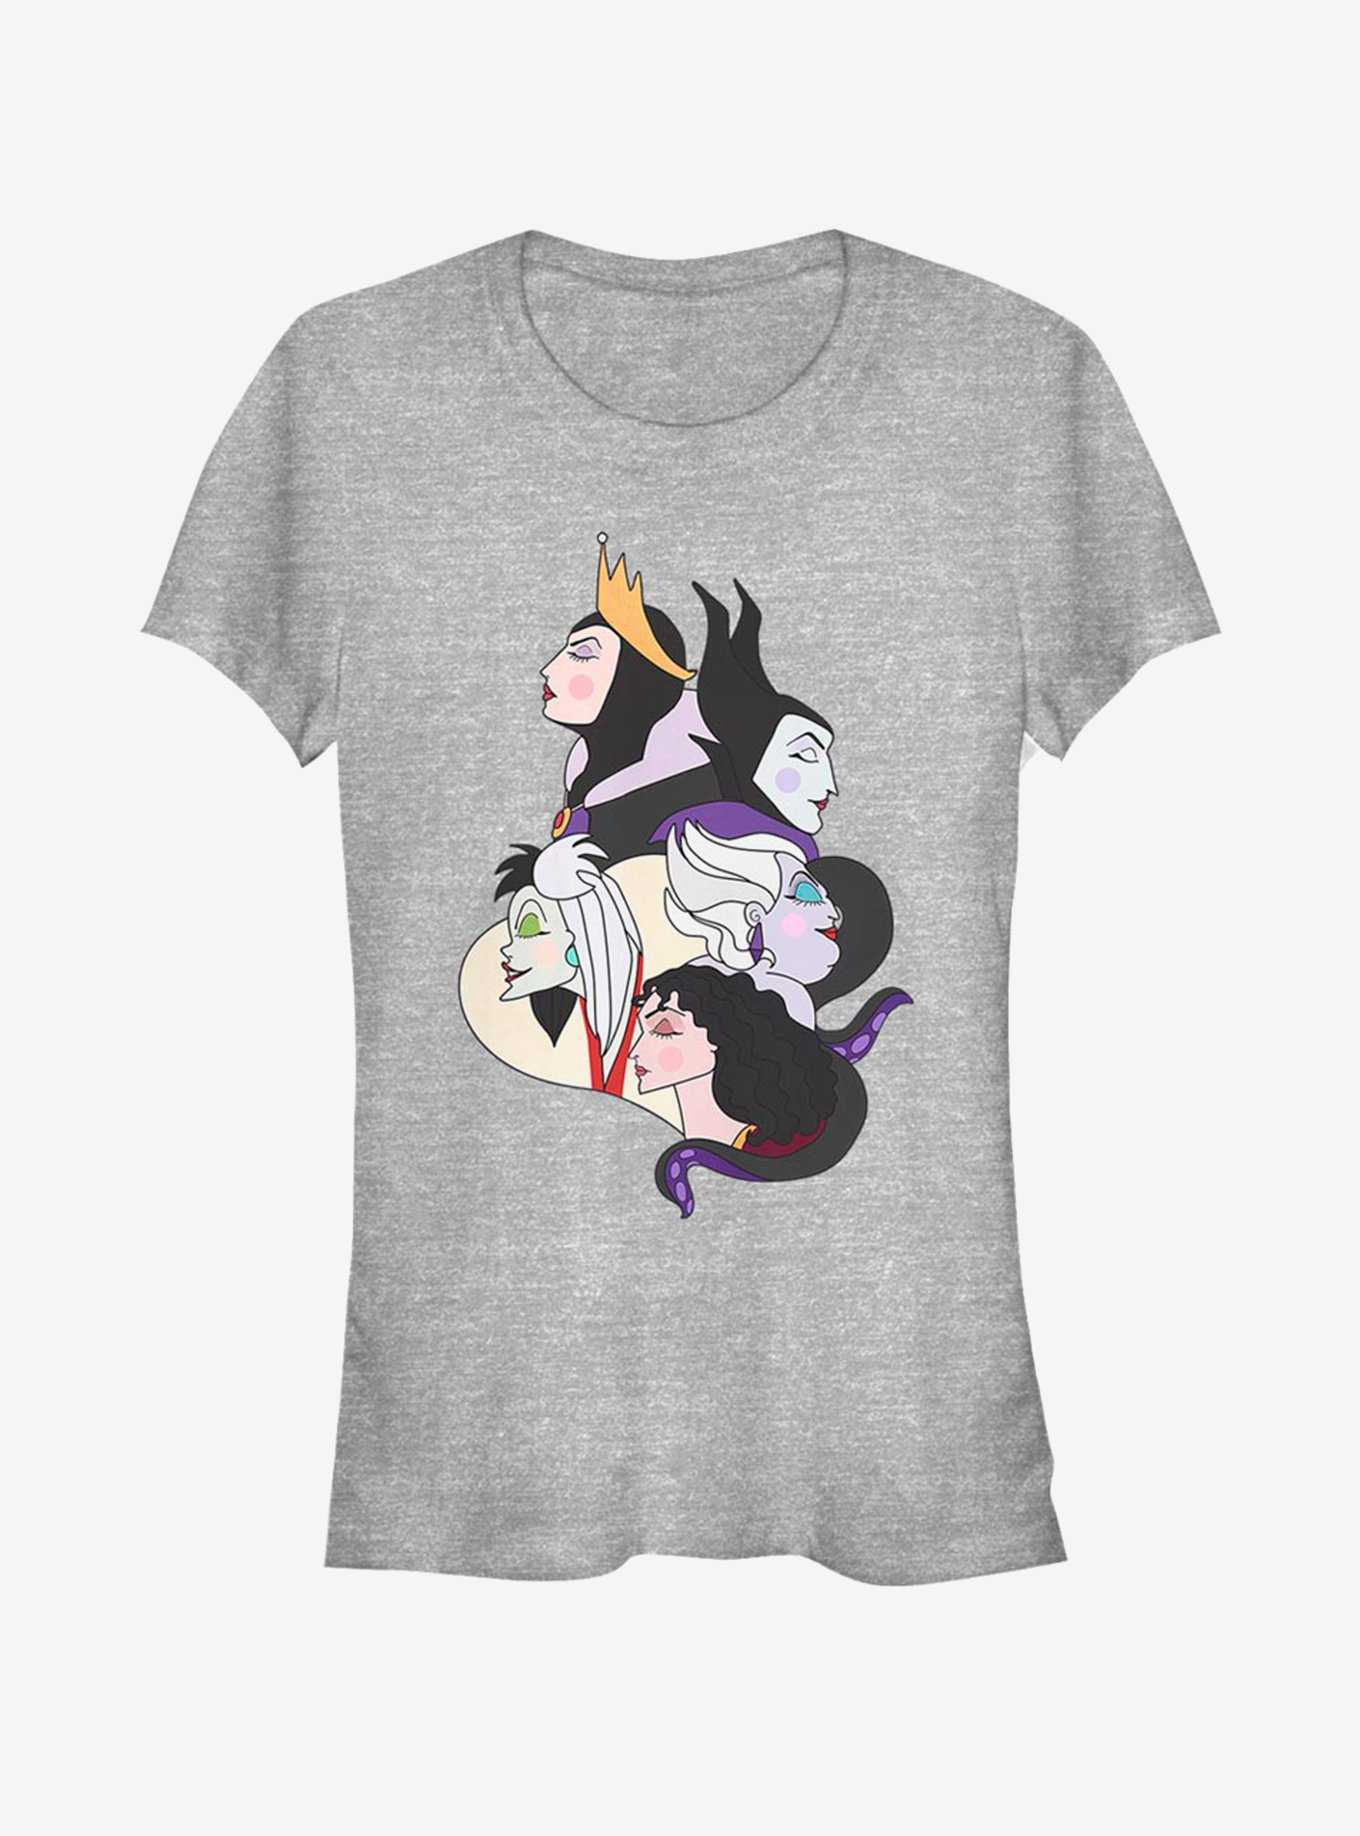 Disney Villains Wicked Profile Girls T-Shirt, , hi-res